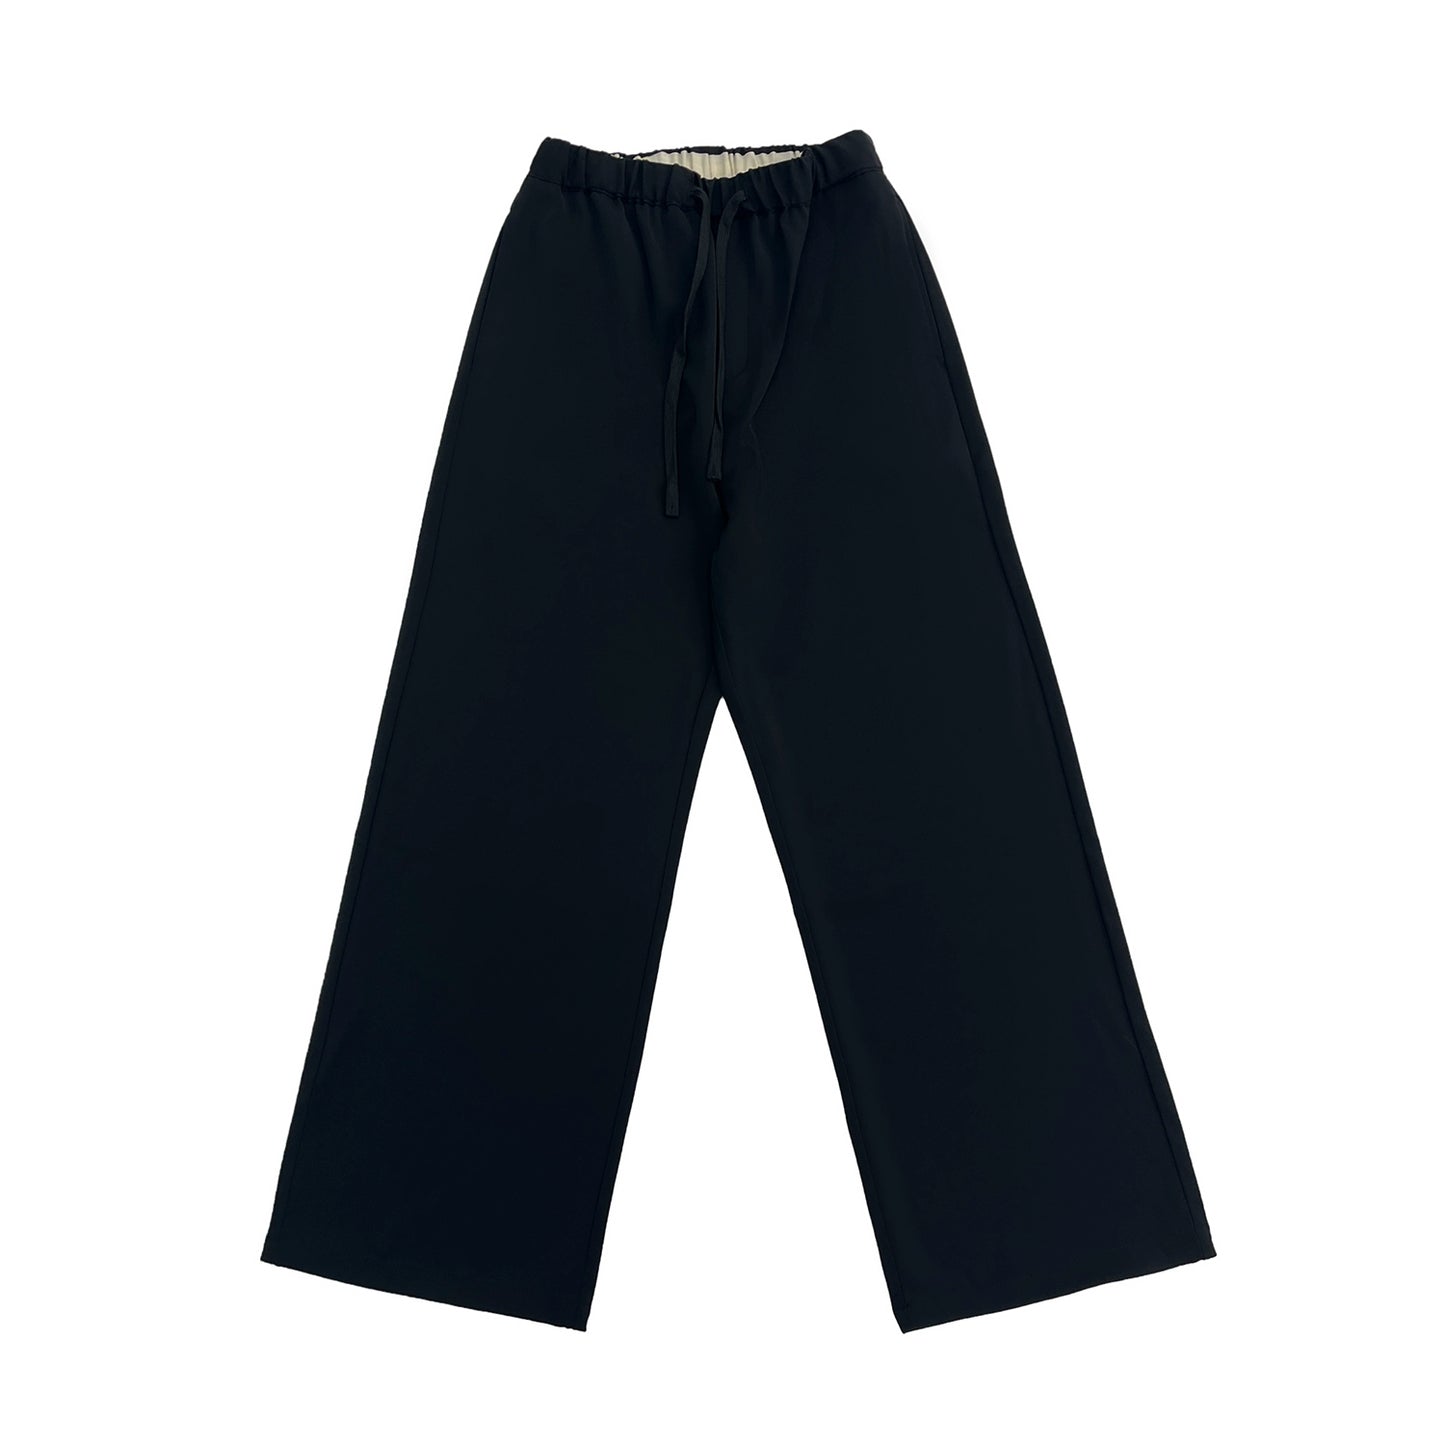 MICHINNYON black/grey casual elastic waistband straight loose fit versatile trousers drape simple suit pants trend